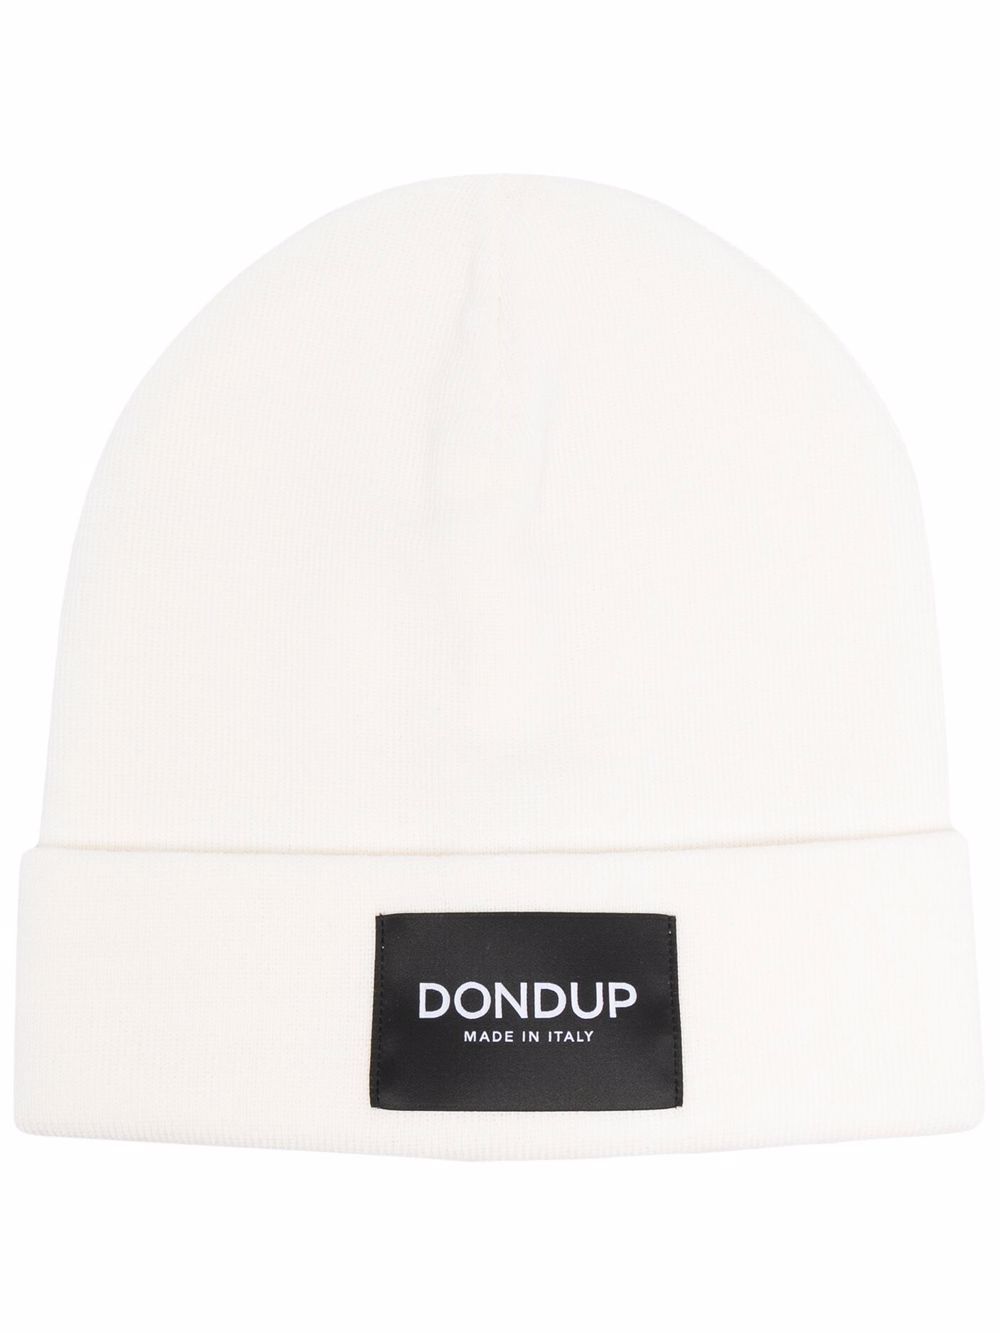 фото Dondup шапка бини с нашивкой-логотипом